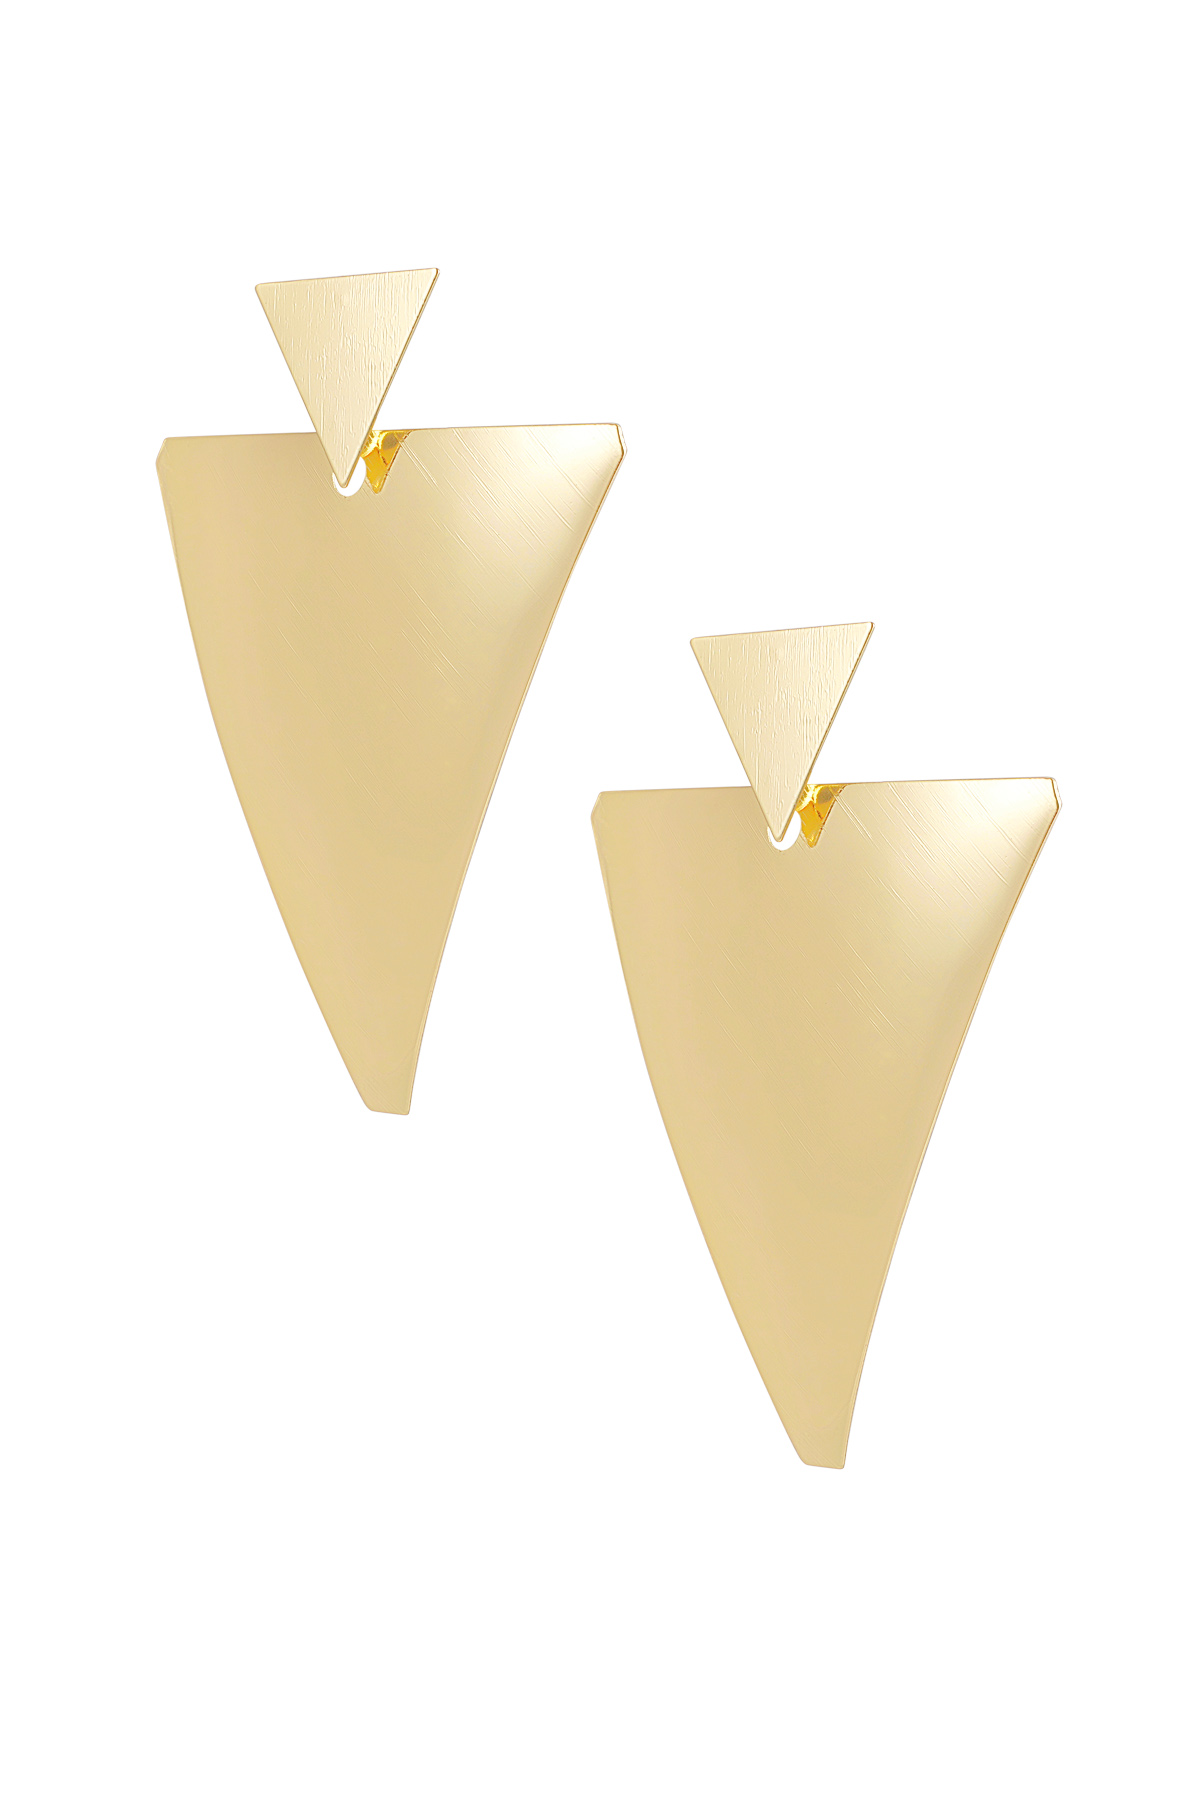 Double triangle earrings - gold